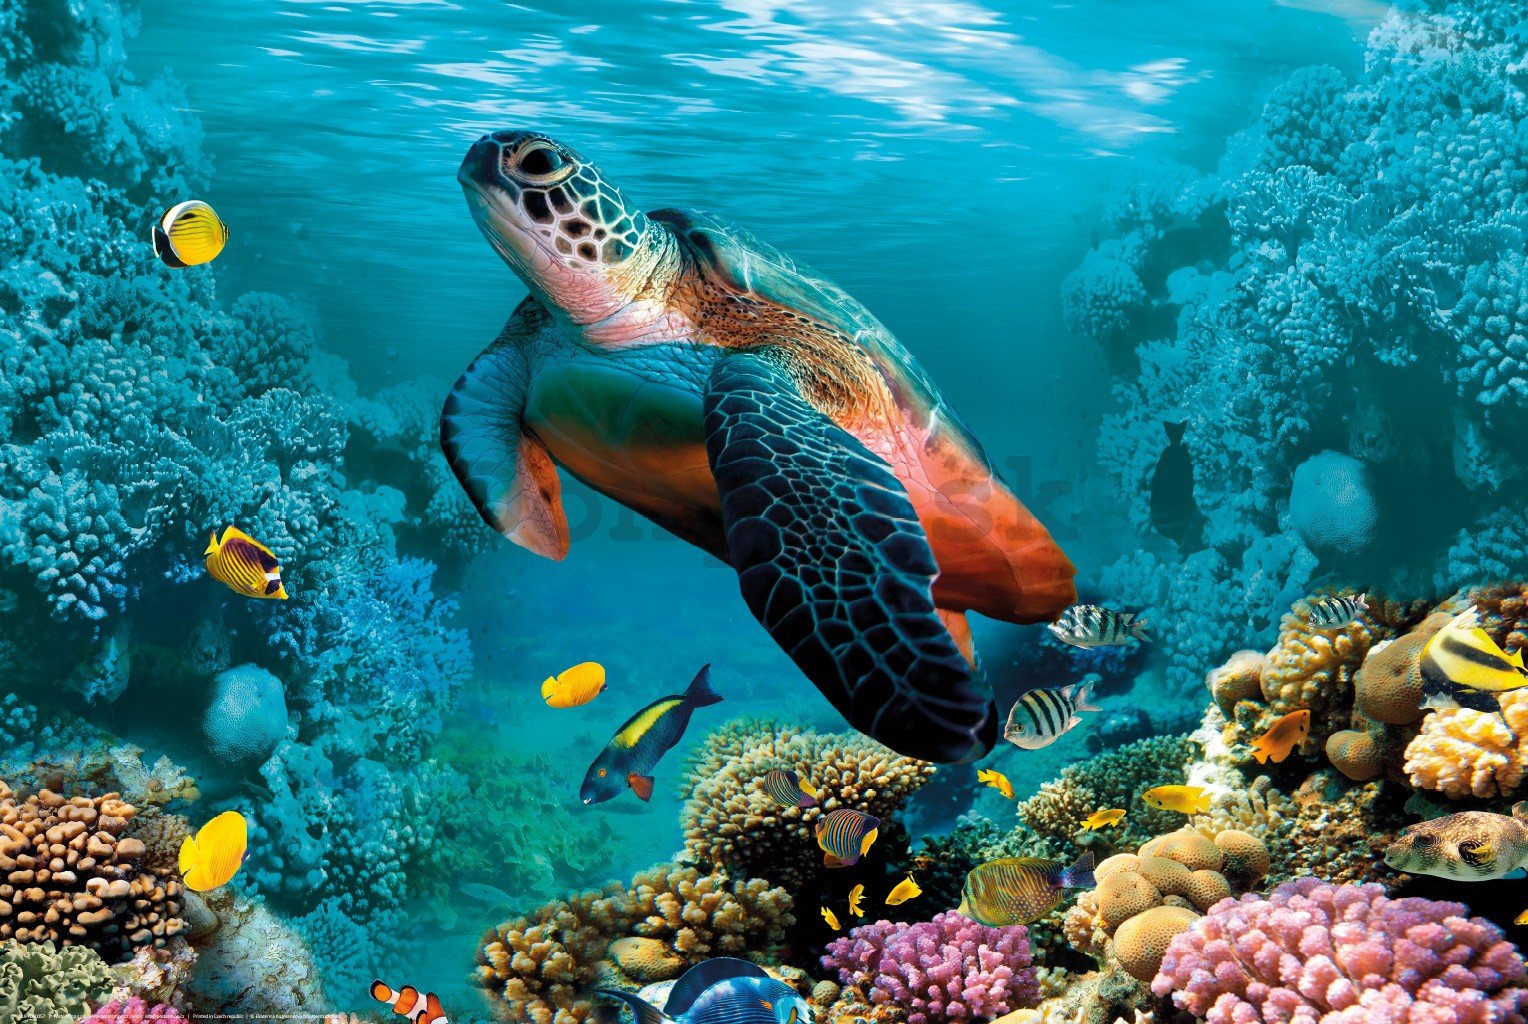 Plagát: Podmorský život (korytnačka a koraly)